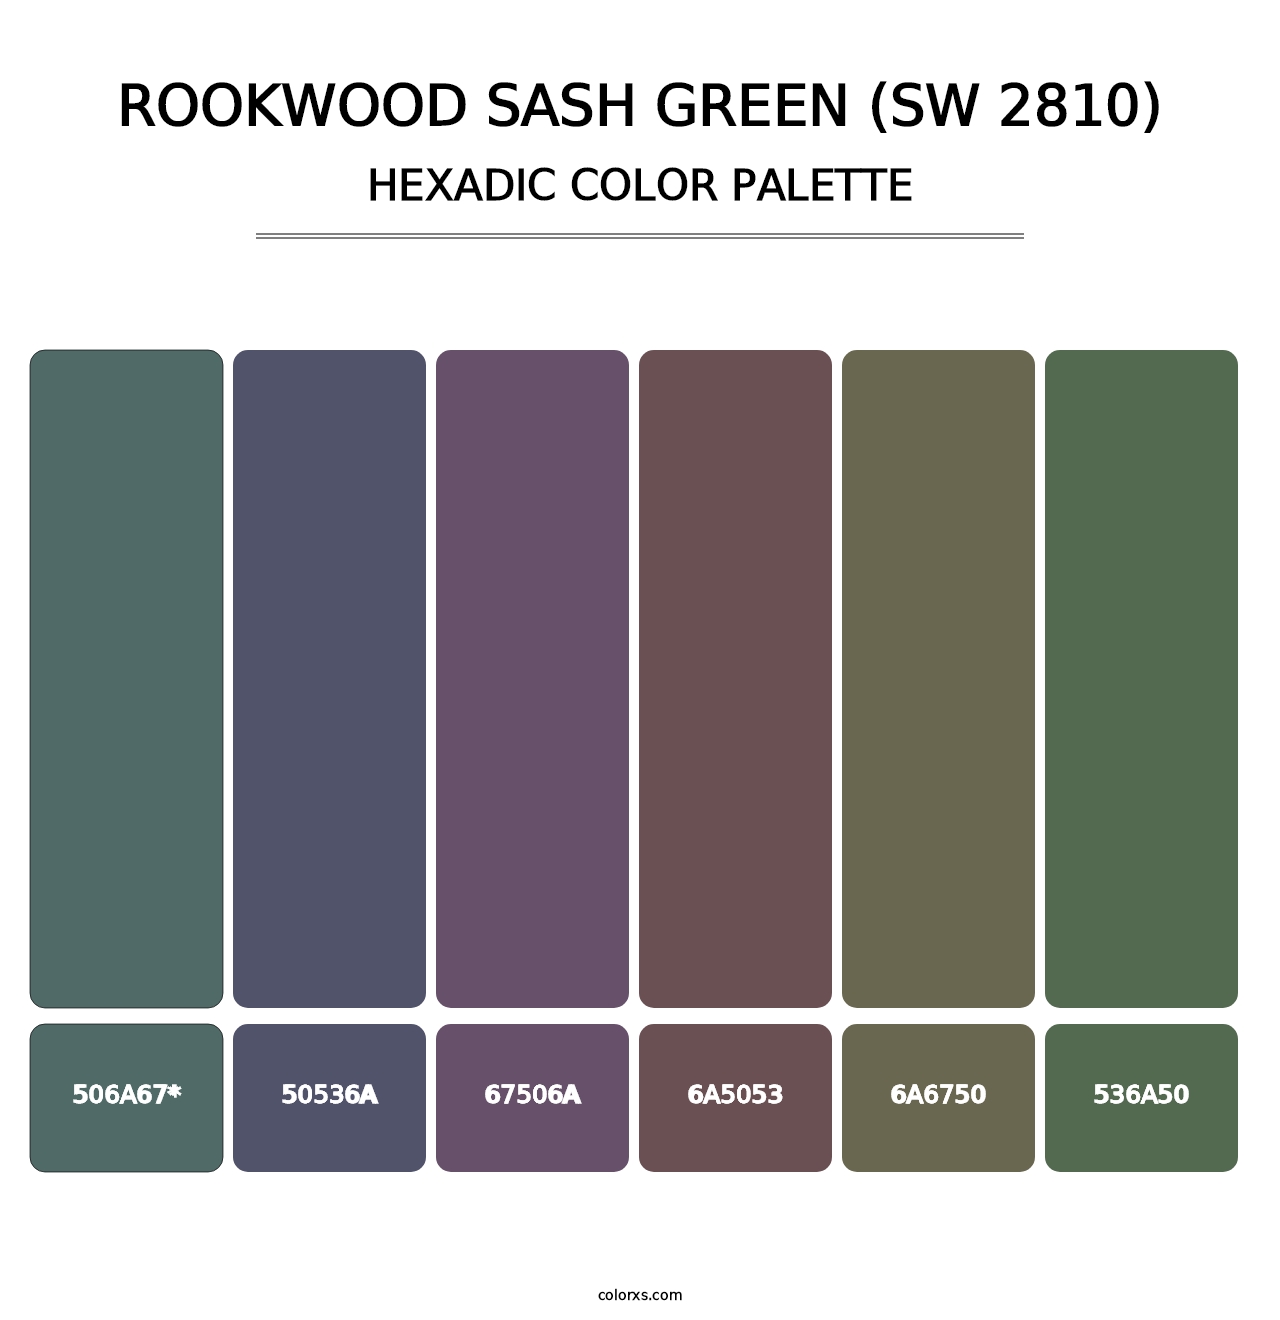 Rookwood Sash Green (SW 2810) - Hexadic Color Palette